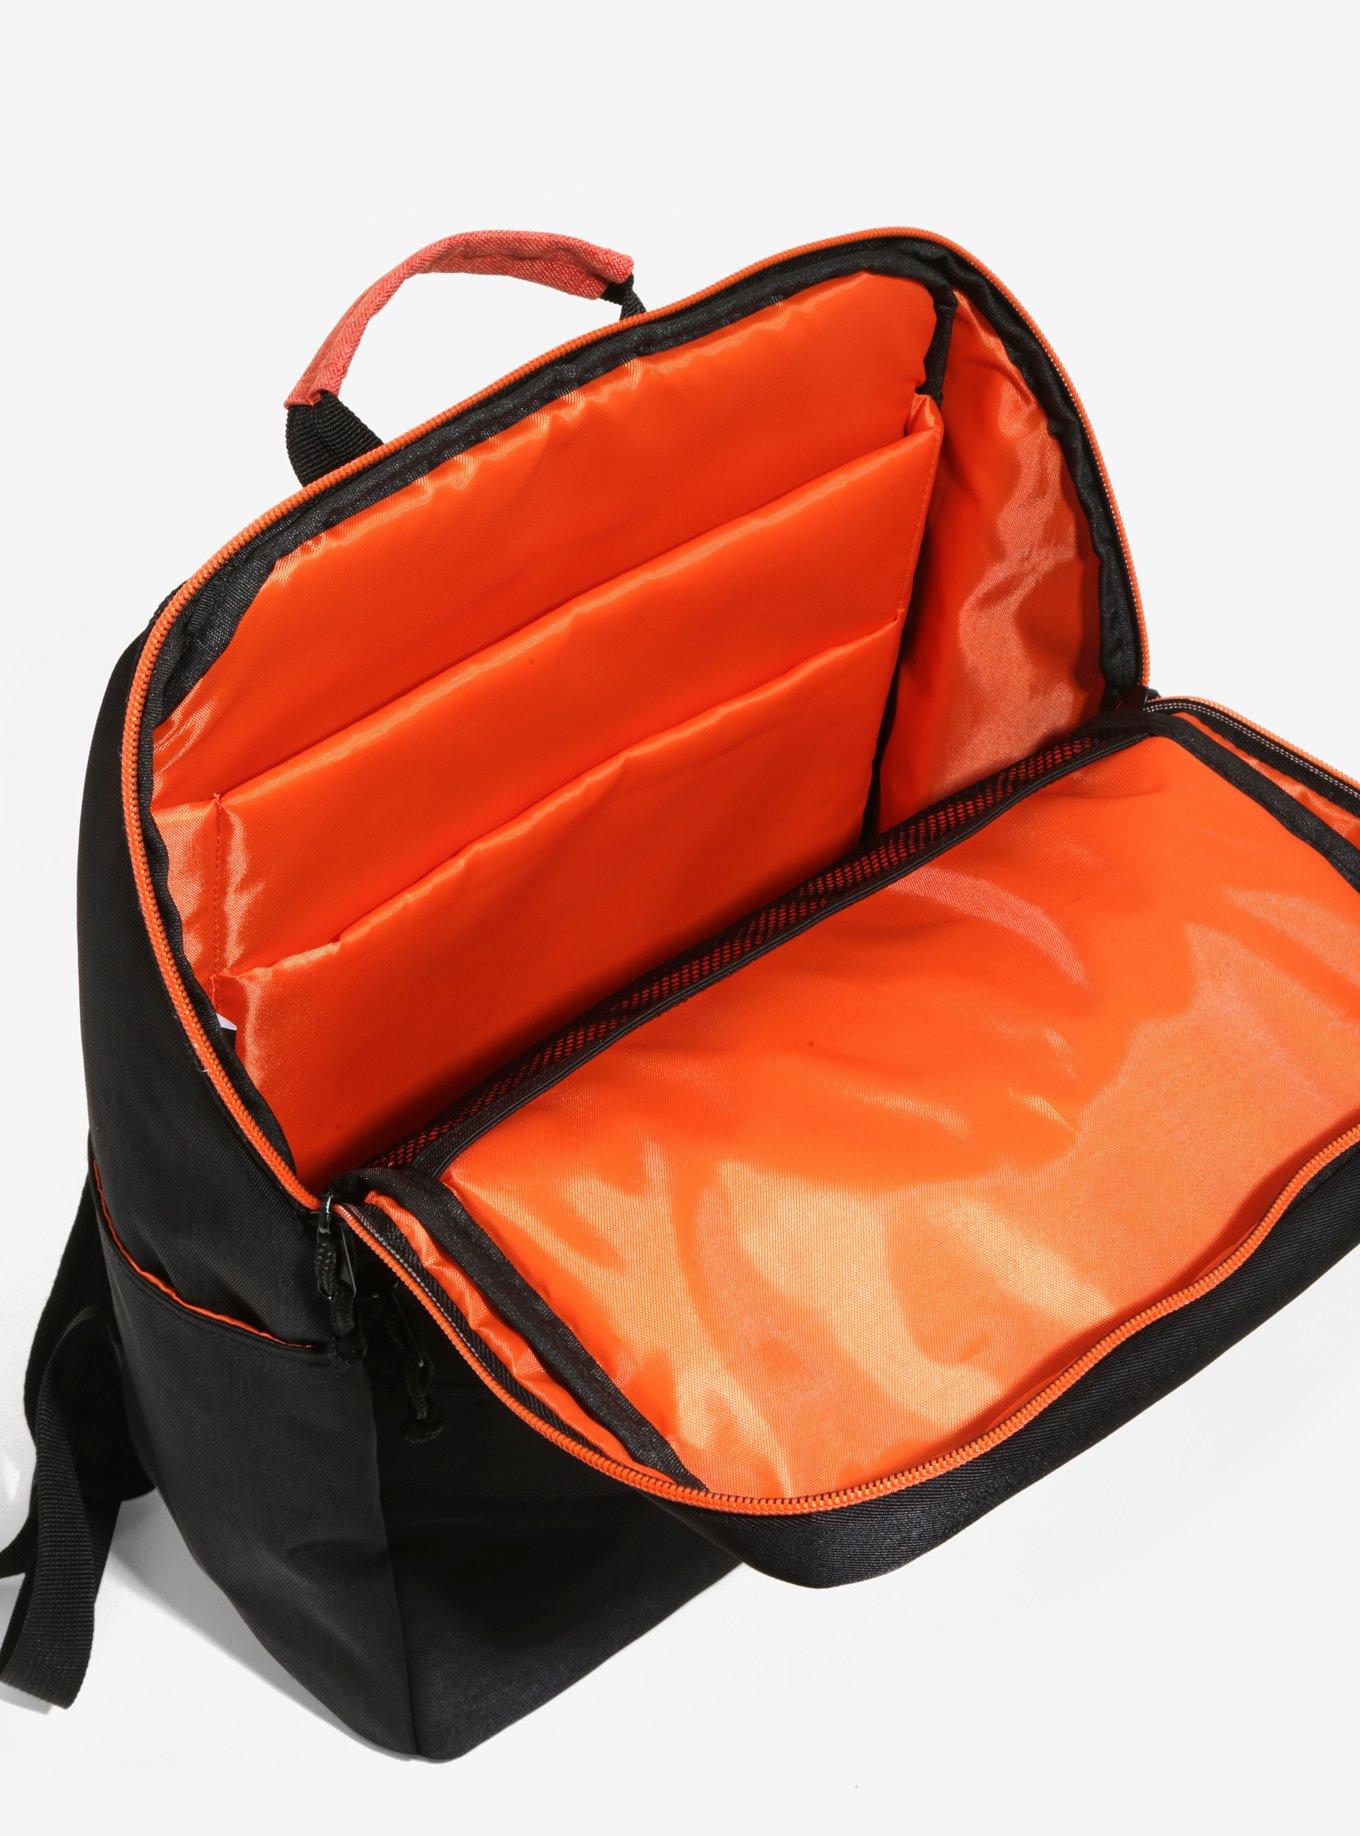 Dragon Ball Z Shoulder Orange Backpack for Sale in San Bernardino, CA -  OfferUp